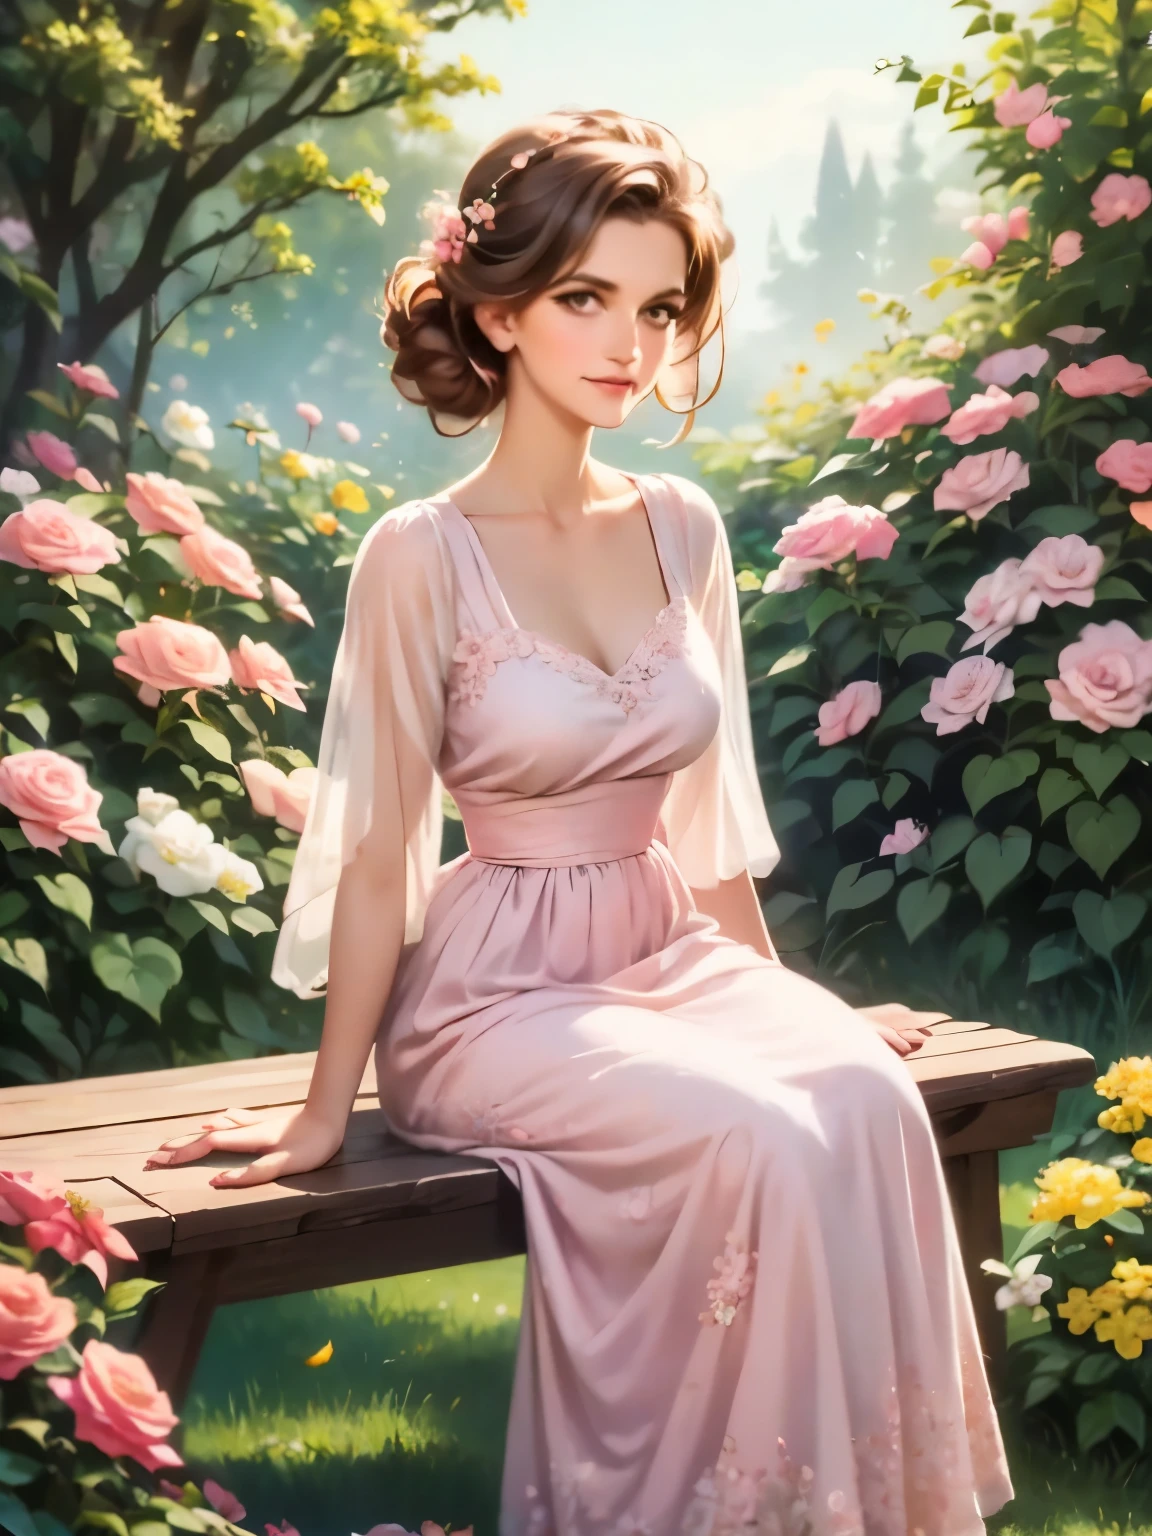 arafed woman 穿著裙子 sitting on a bench in a garden, Evaline Ness 拍攝的彩色照片, flickr, 浪漫主義, 1 9 5 0 s 风格, 5 0 s 风格, 50 年代風格, dressed in a 花朵連身裙, 身穿粉紅色碎花長裙, 花朵連身裙, 穿著一件漂亮的衣服, 穿著裙子, retro 5 0 s 风格